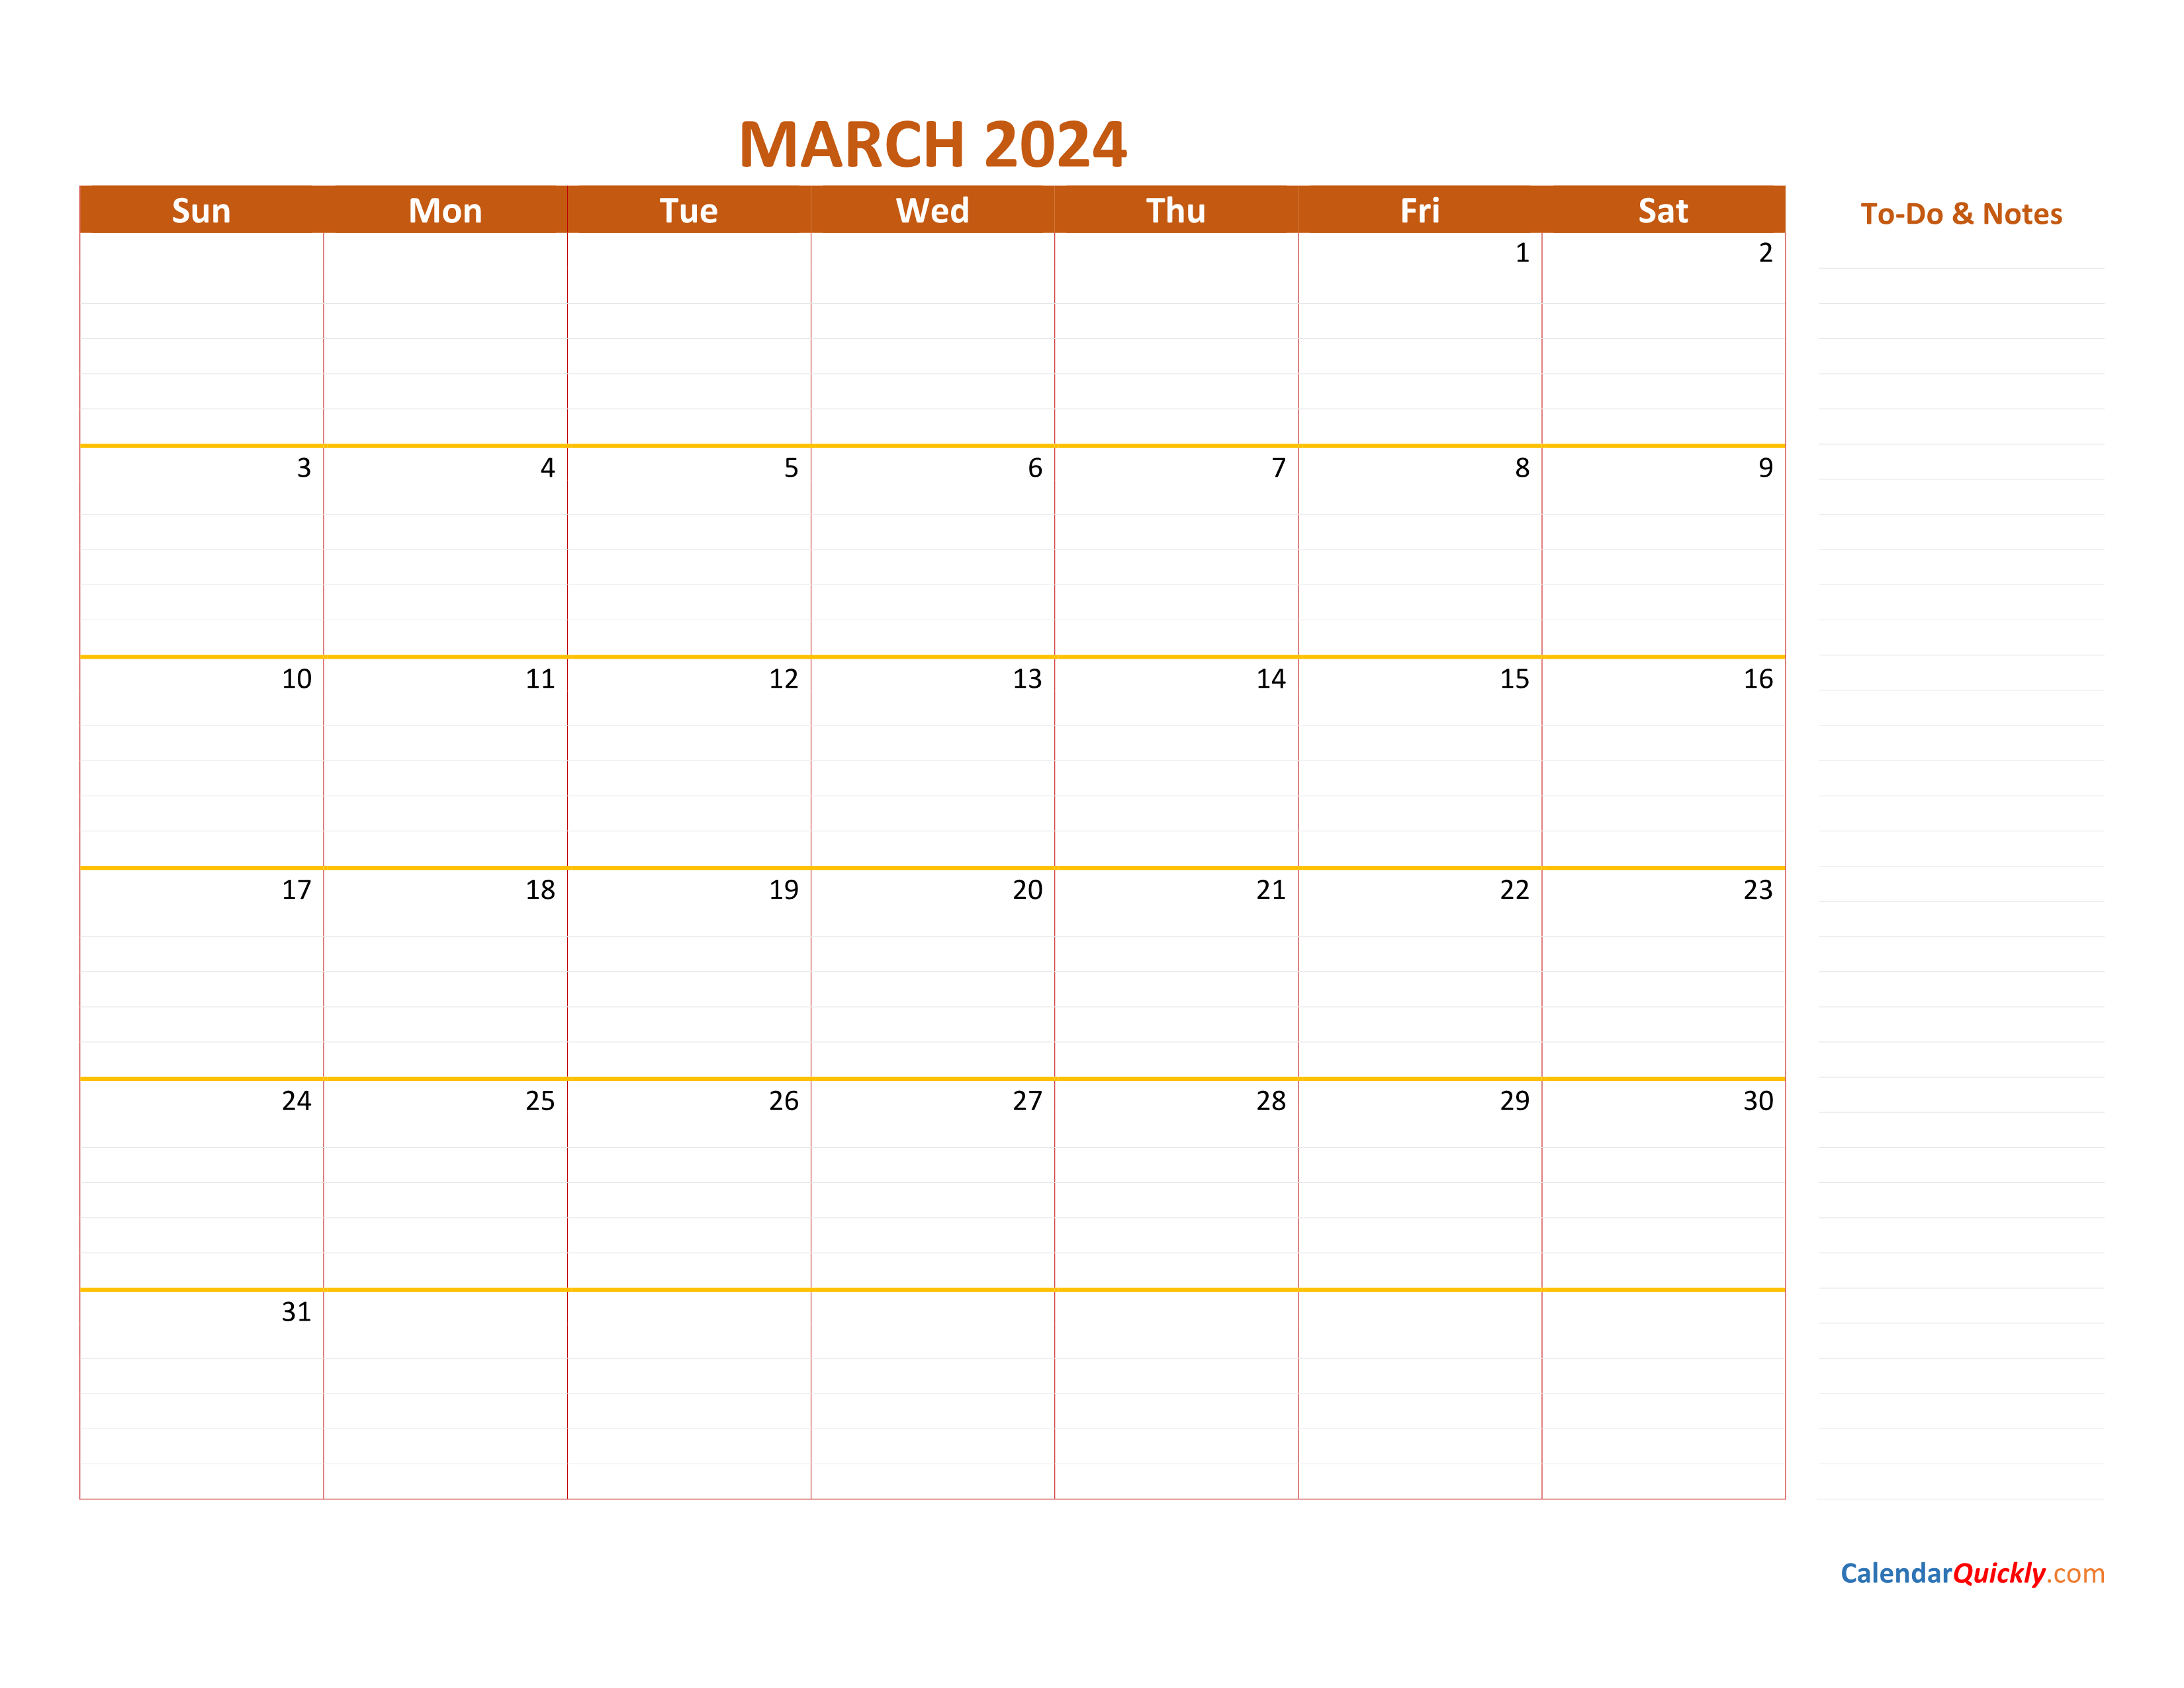 March 2024 Calendar Calendar Quickly